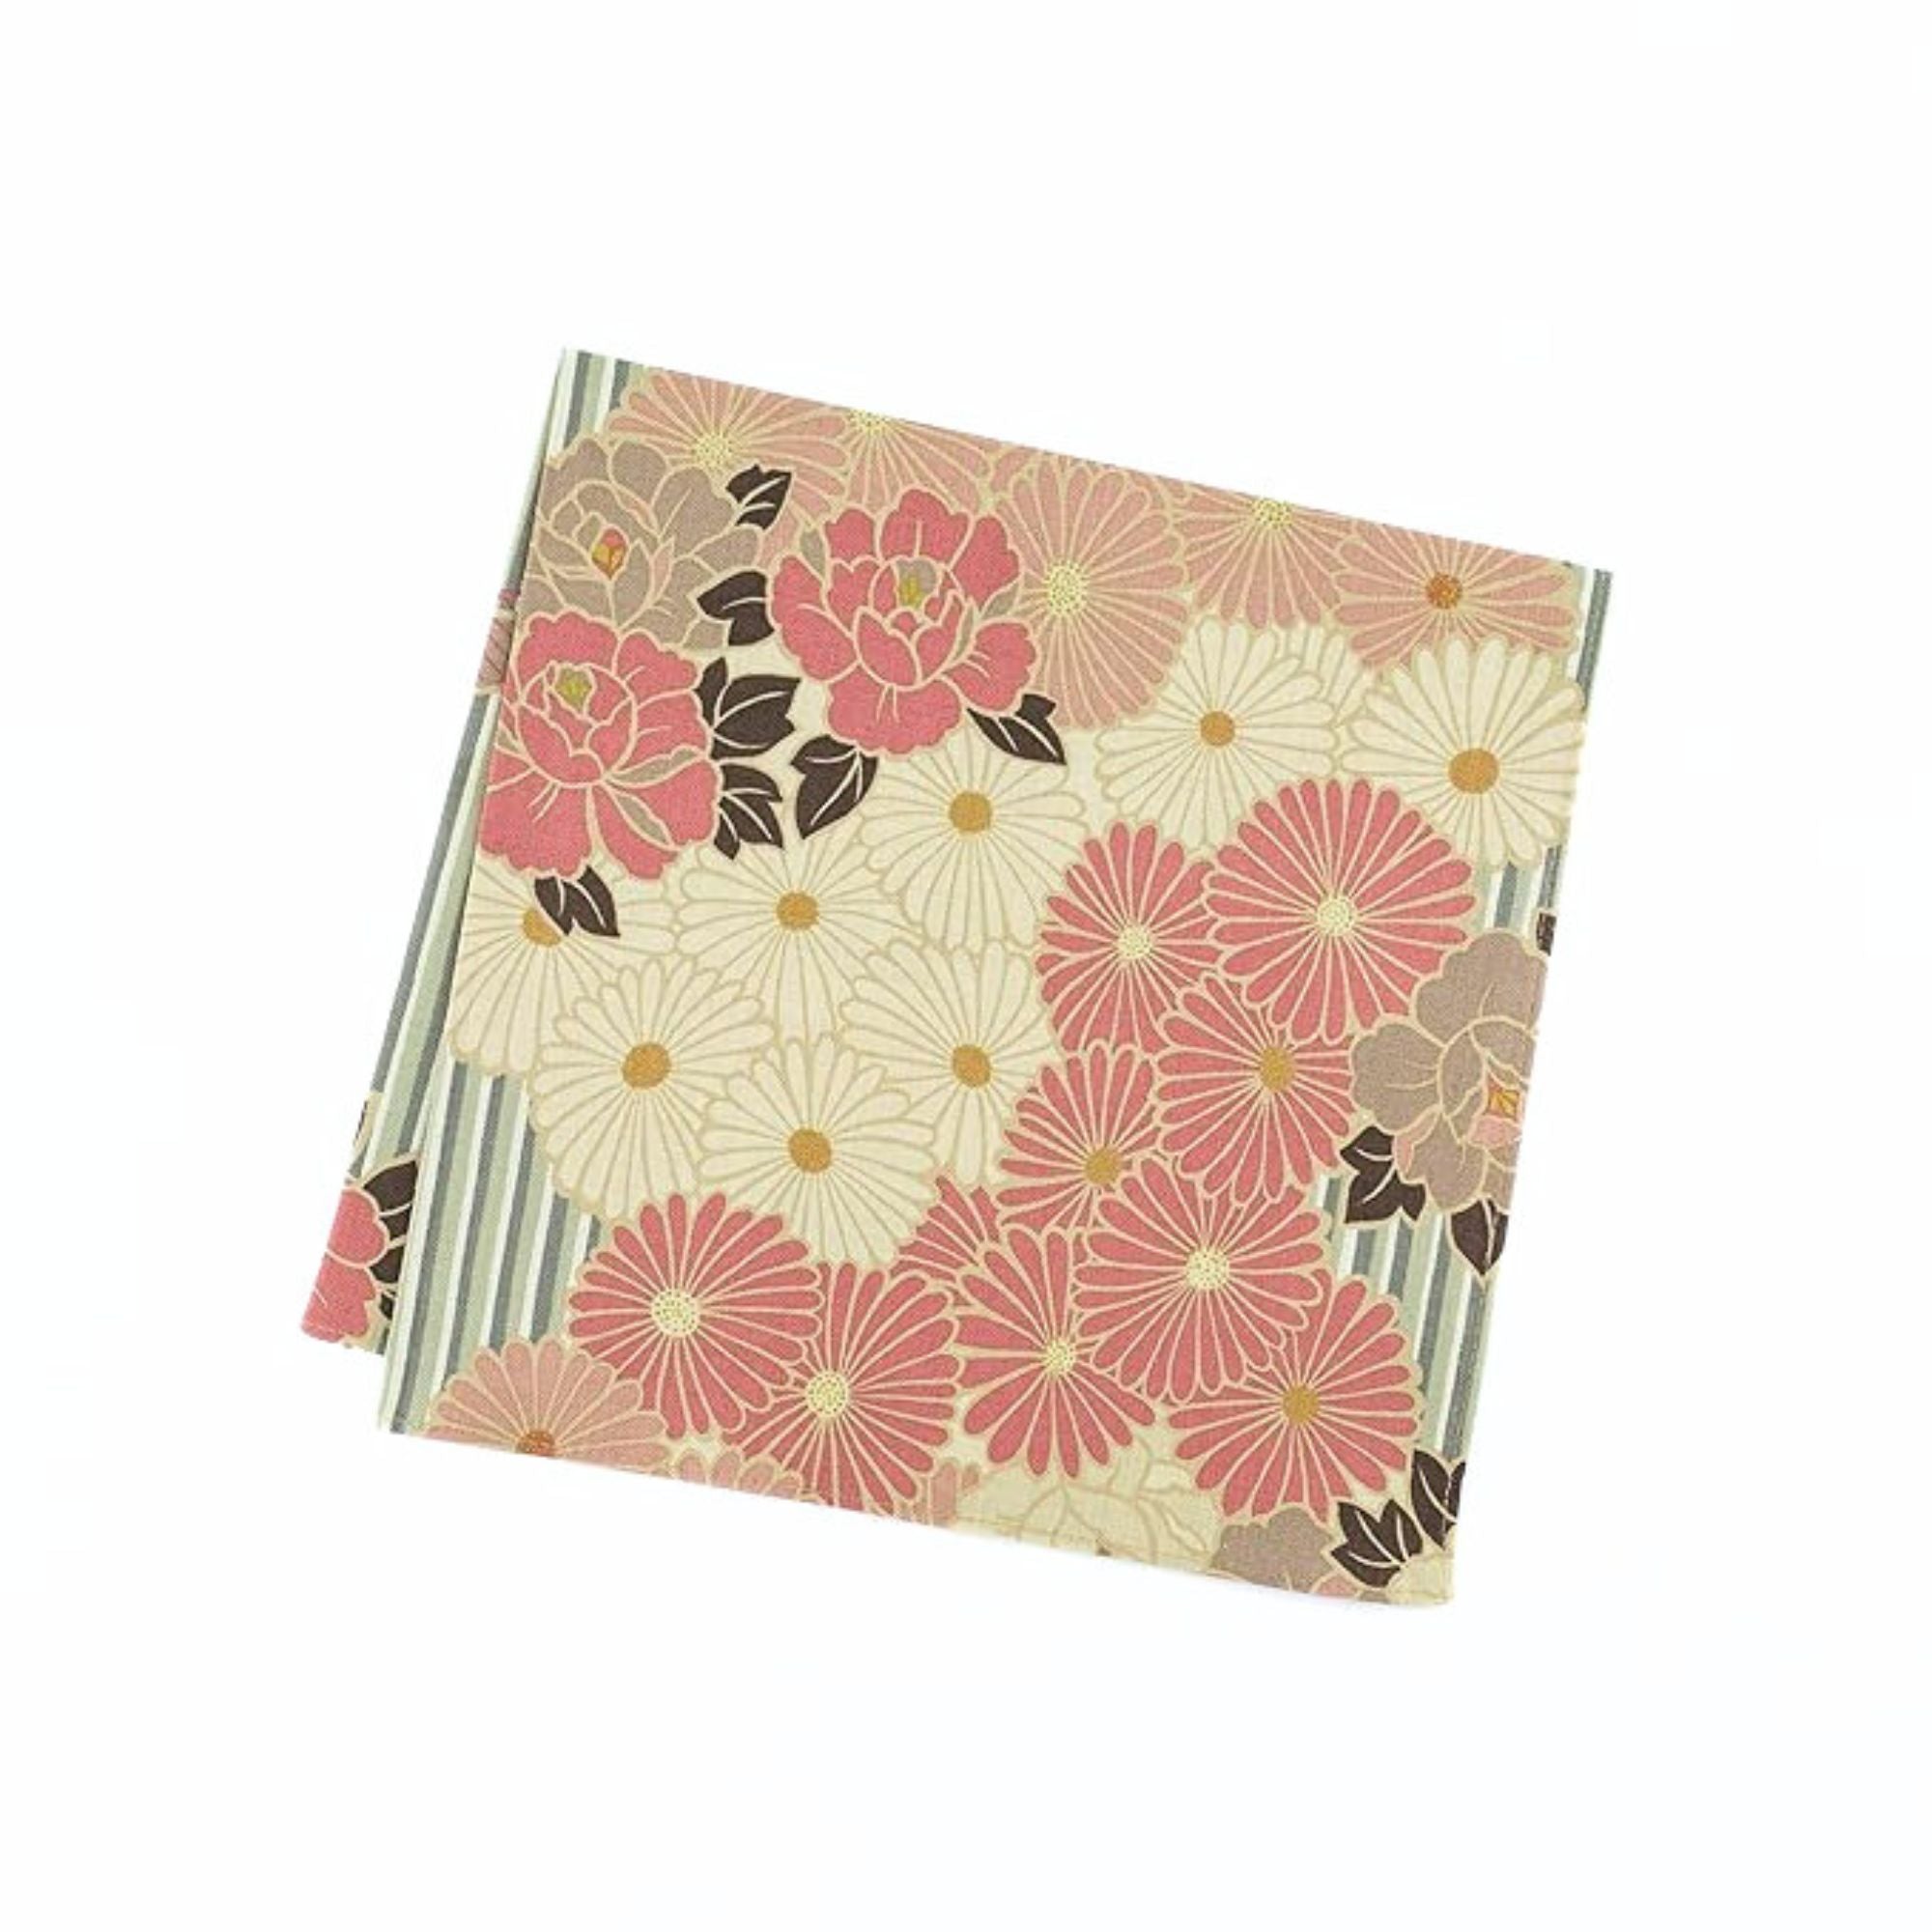 Corazon Japan Furoshiki (Decorative Fabric), Vintage Kimono Flower Design